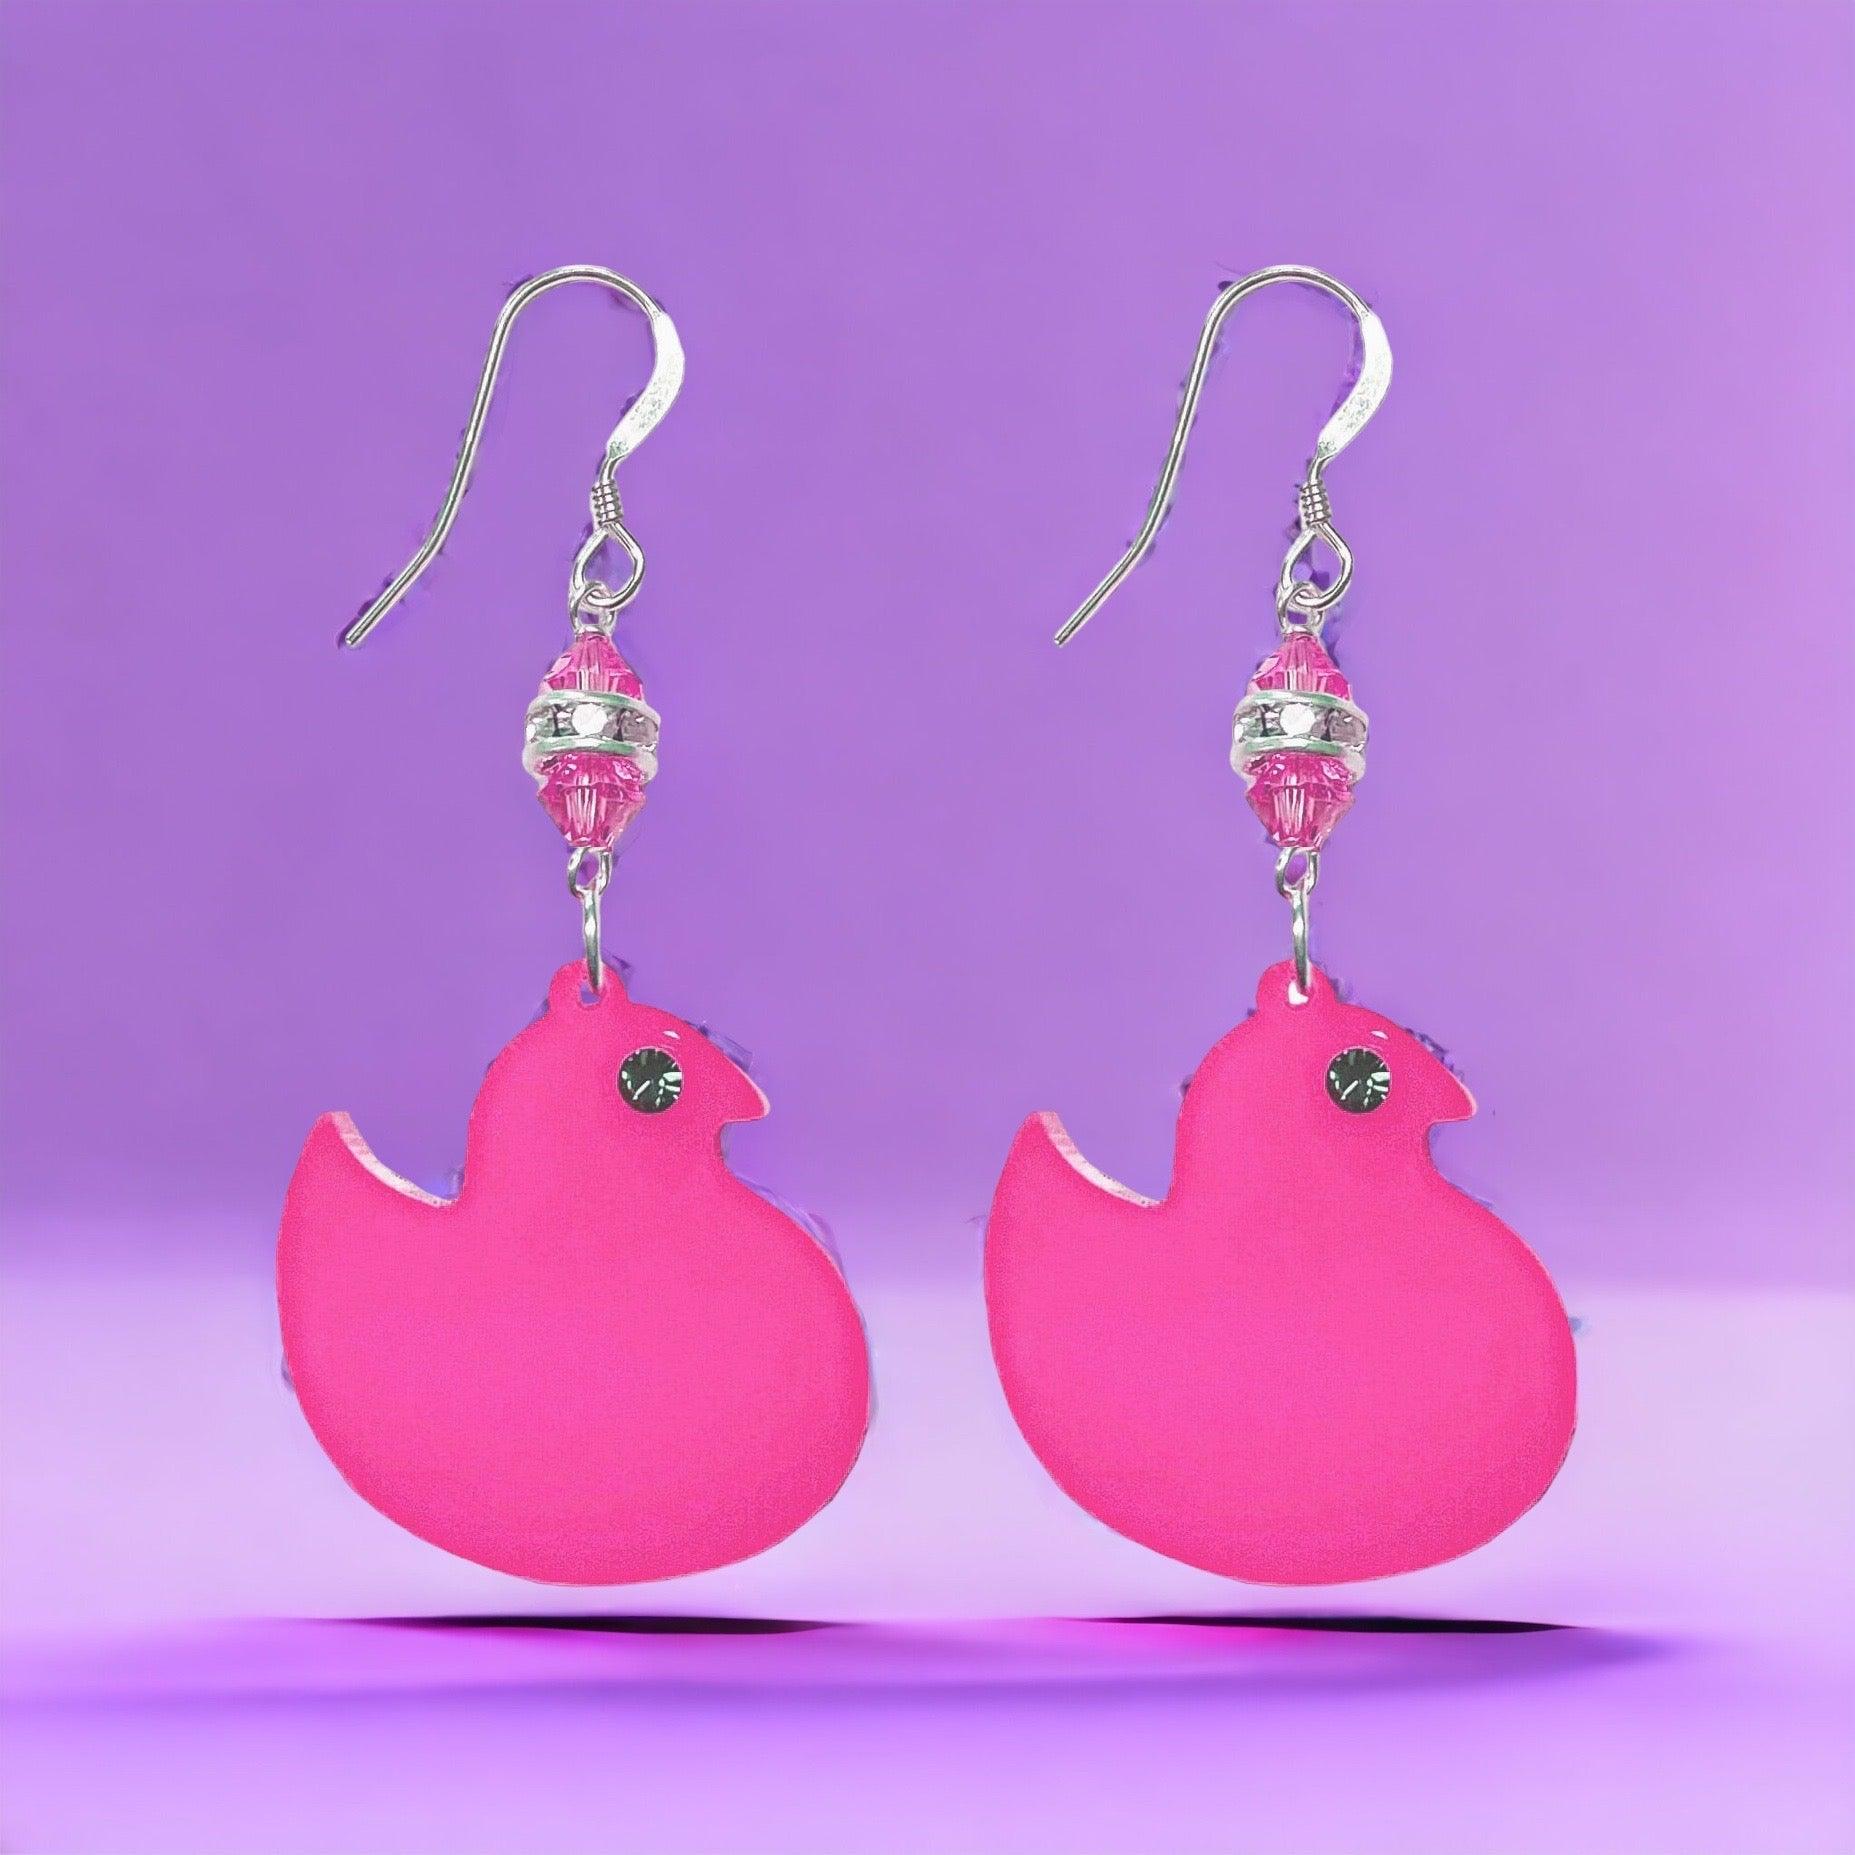 DIY Acrylic Earring Kit - Peep Chick Easter Earring